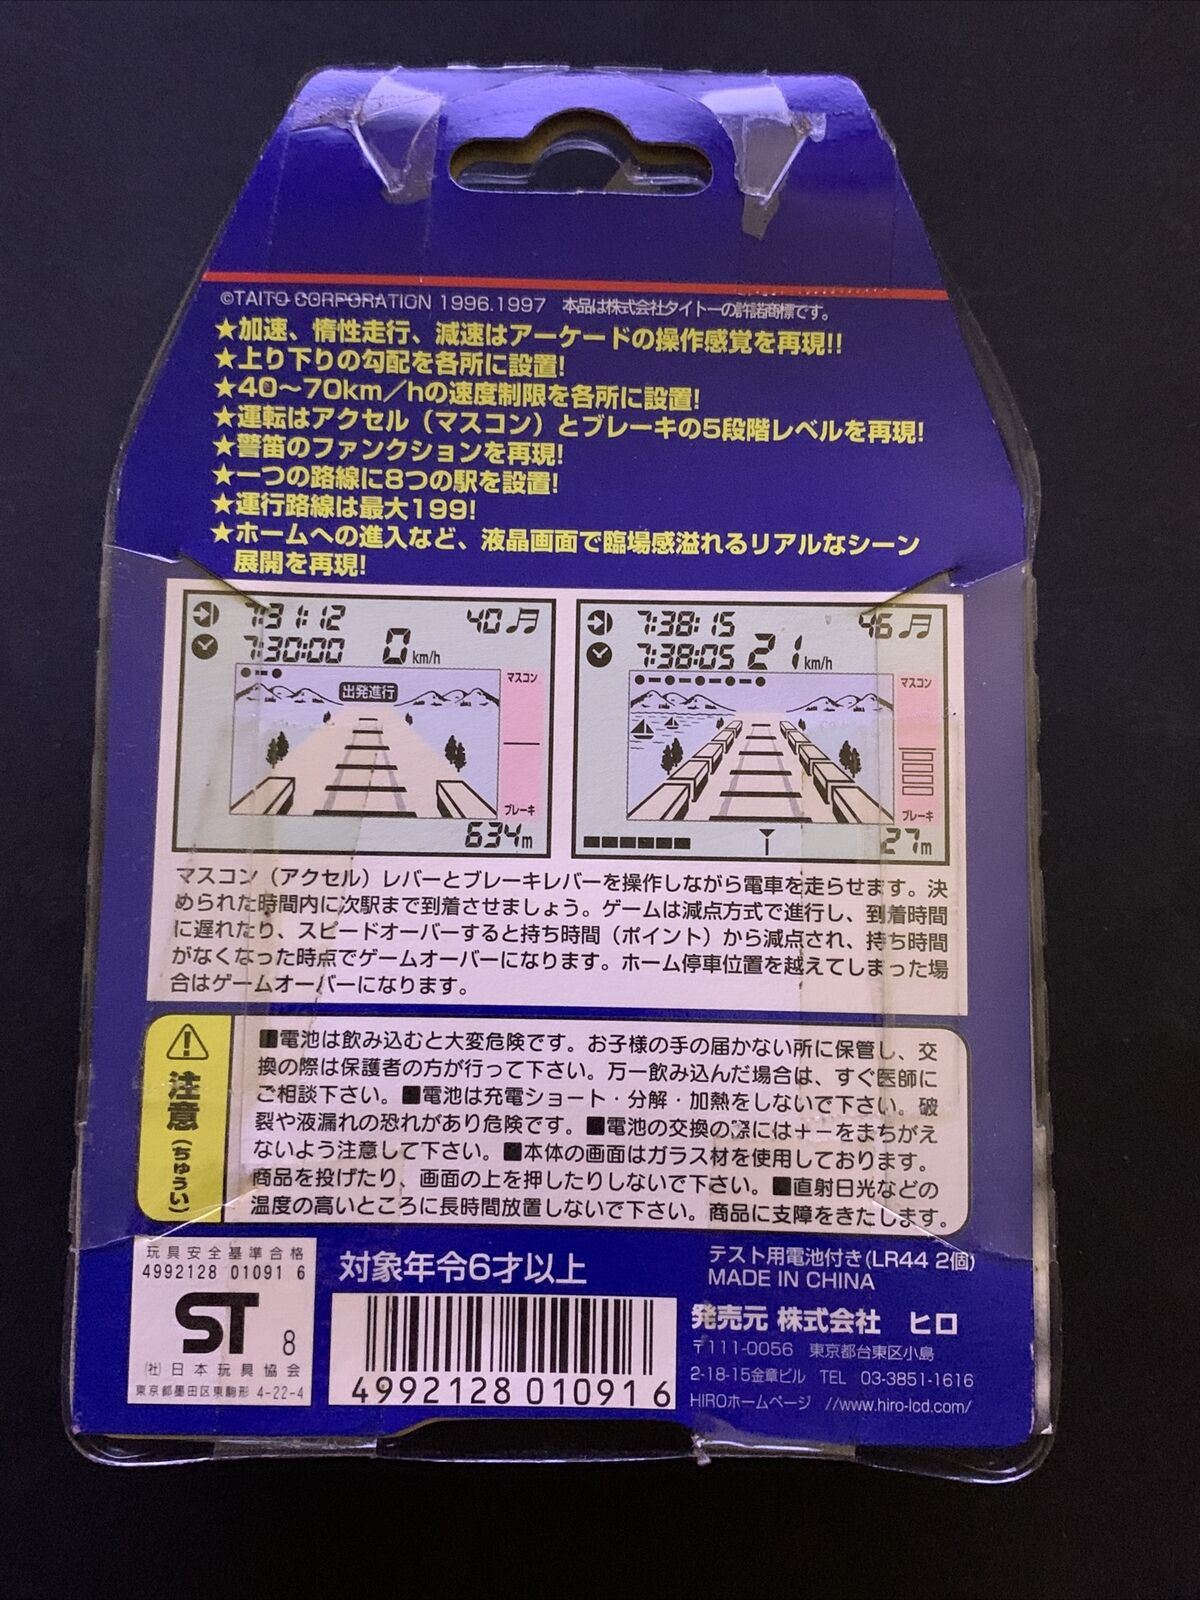 *NEW* Densha De Go Handheld Game 1997 - Japan Train Simulation Portable - Rare!!